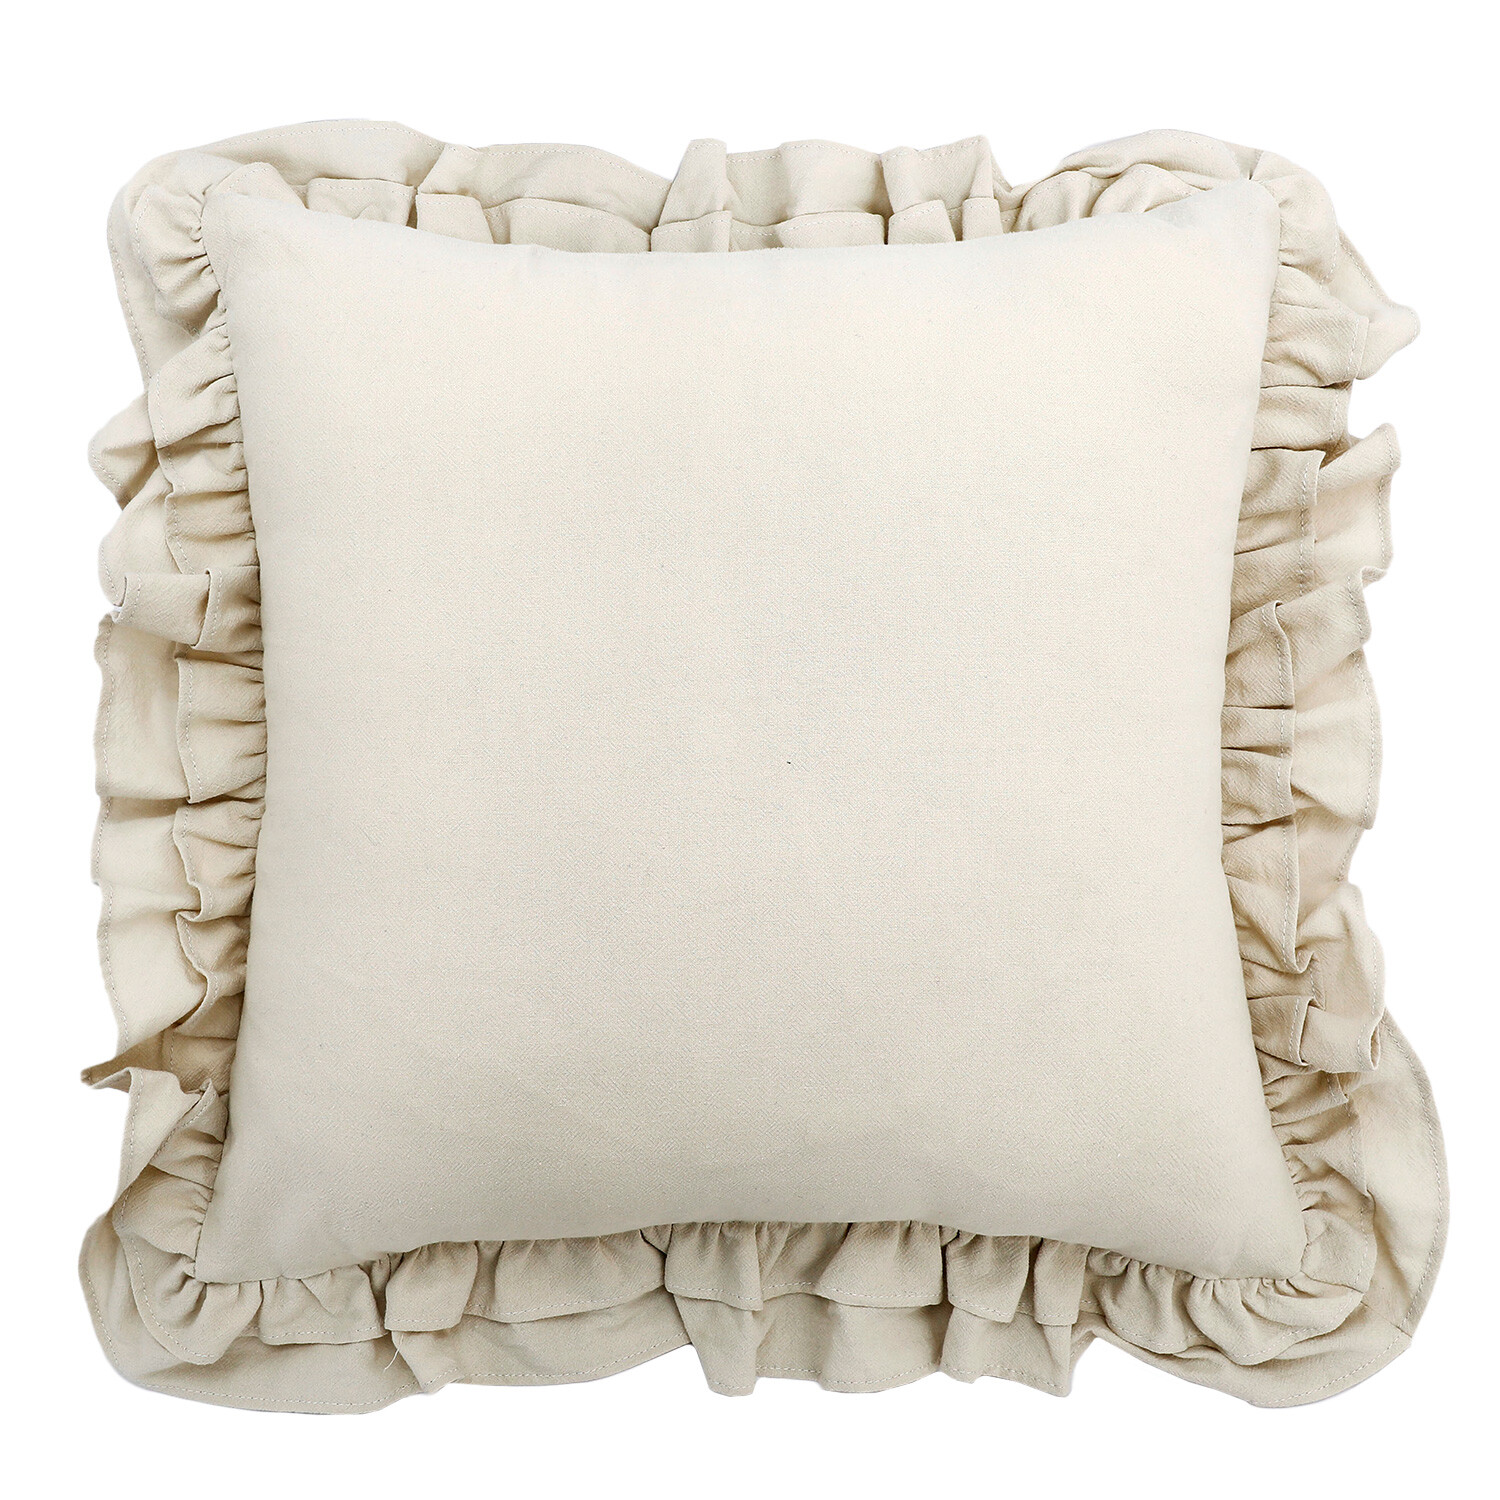 Amelie Ruffle Cushion - Natural Image 1